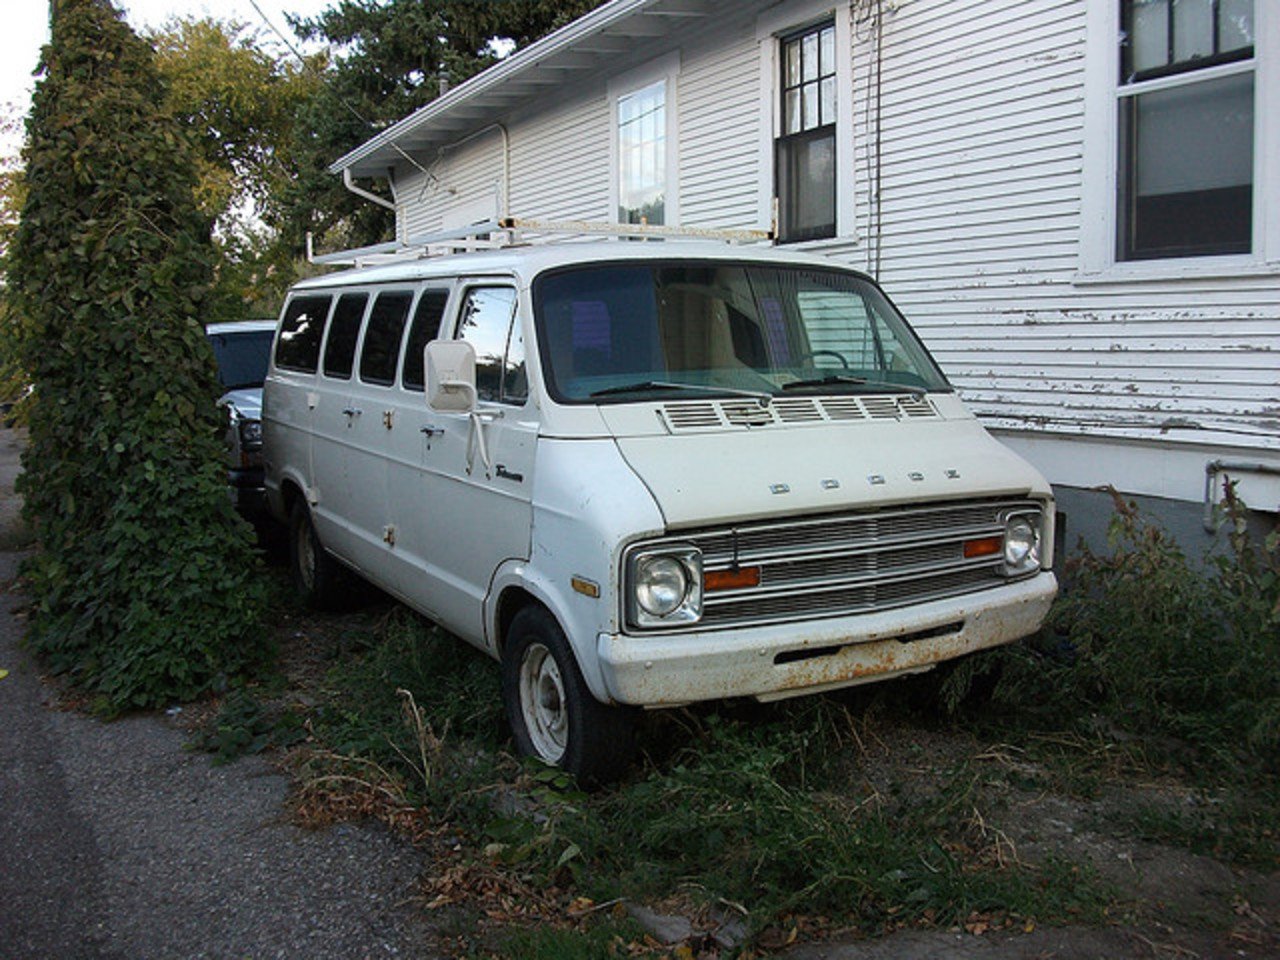 Dodge Tradesman 200 van | Flickr - Photo Sharing!